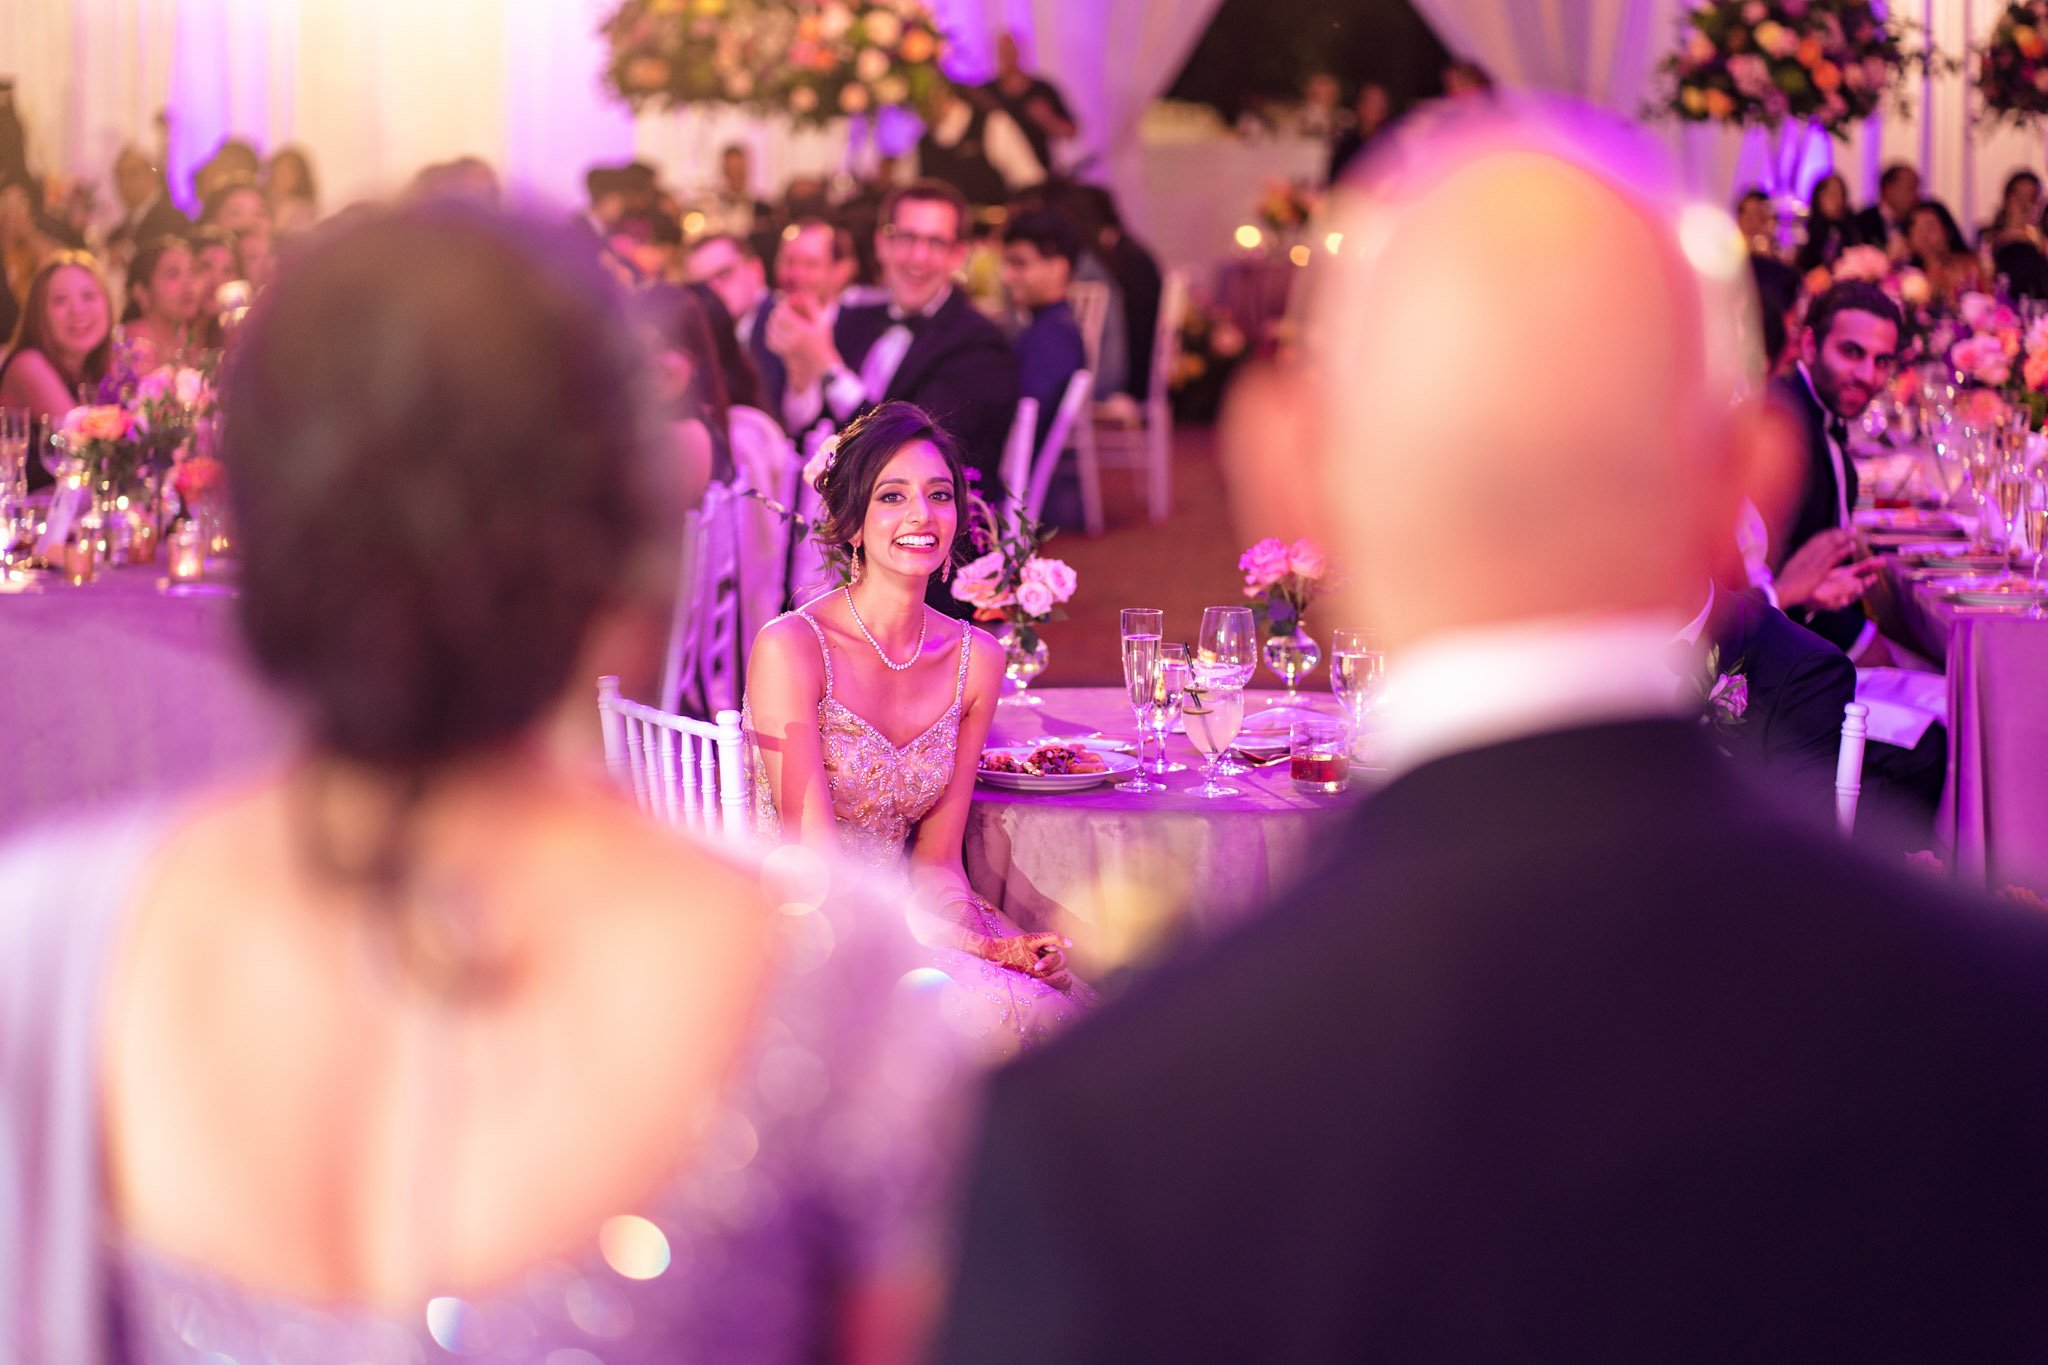 A bride and groom exchanging glances at a Biltmore Estate wedding reception.